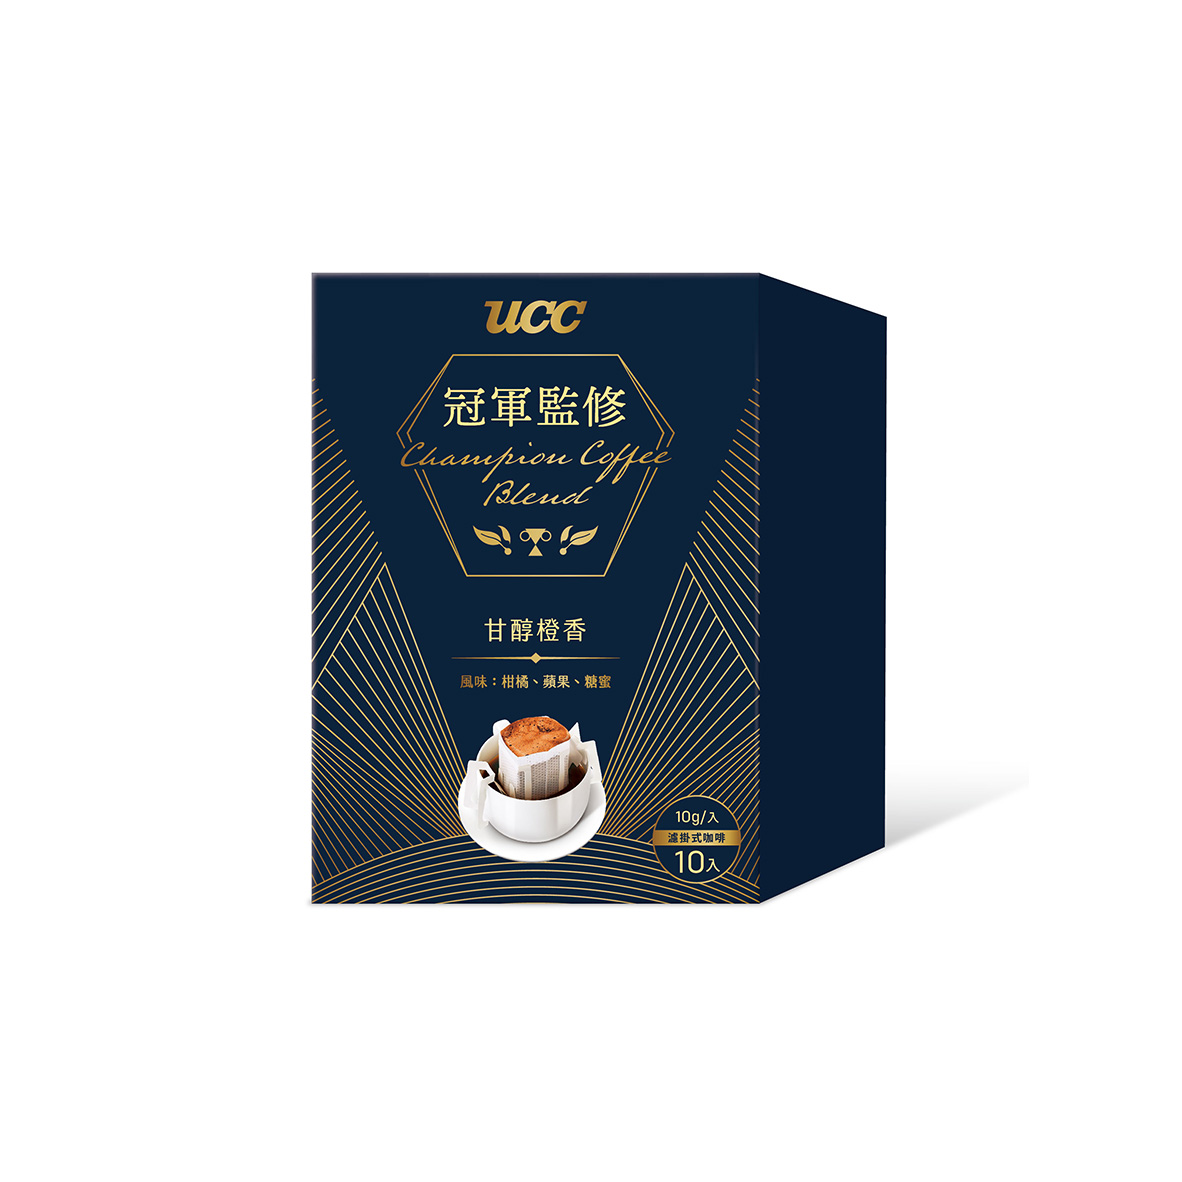 UCC Champion Coffee Orange Blend Drip Coffee